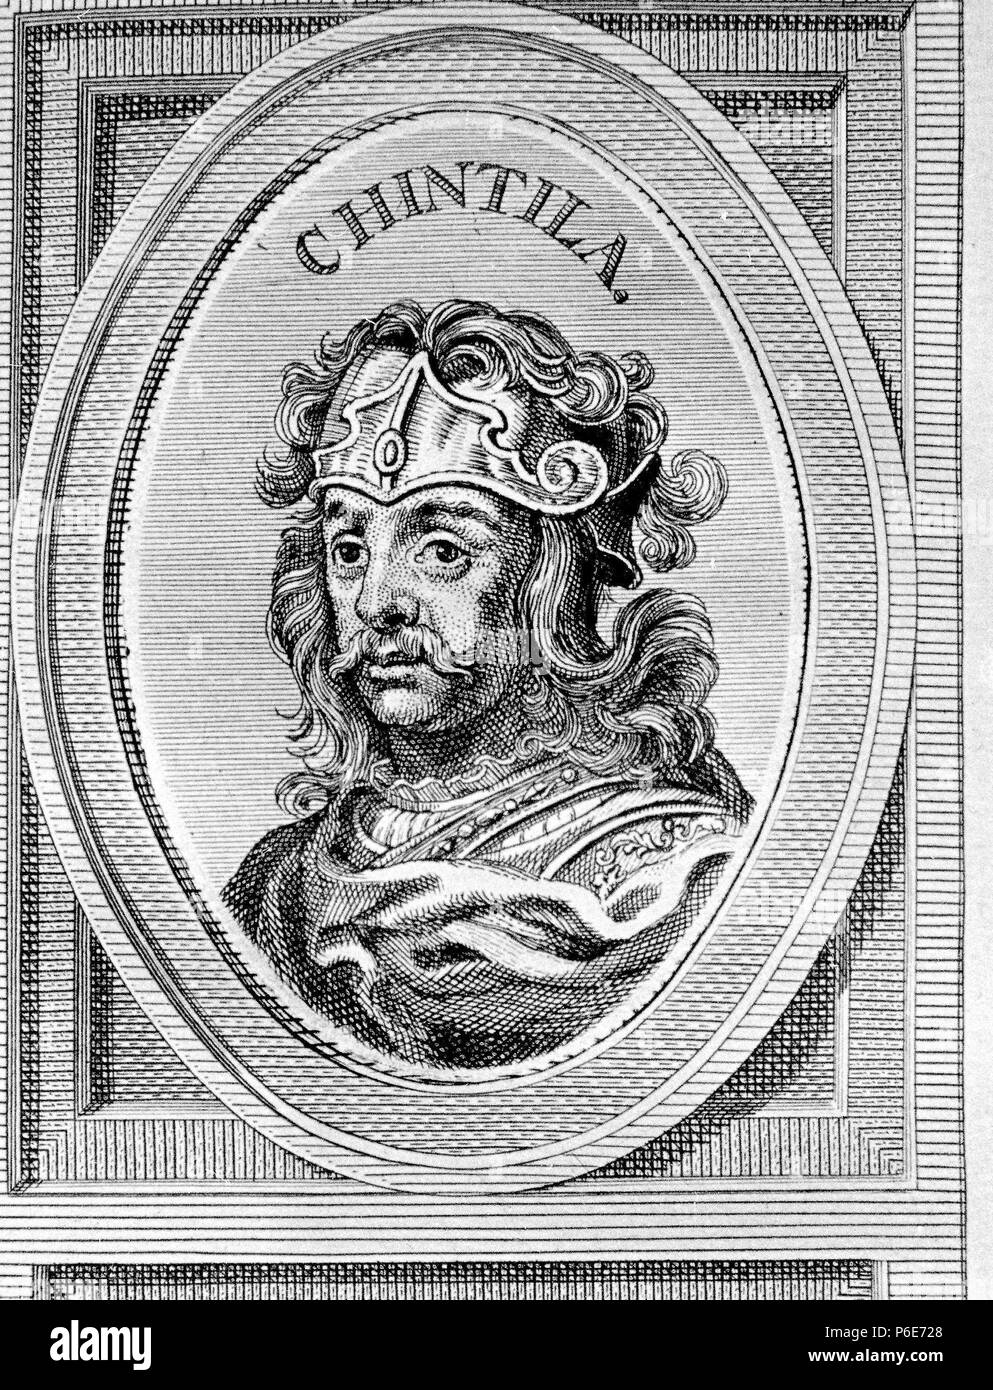 CHINTILA. REY VISIGODO DE 636-639. GRABADO DE ARNOLDO VANWESTER, 1684. BIBLIOTECA NACIONAL. MADRID. Stockfoto